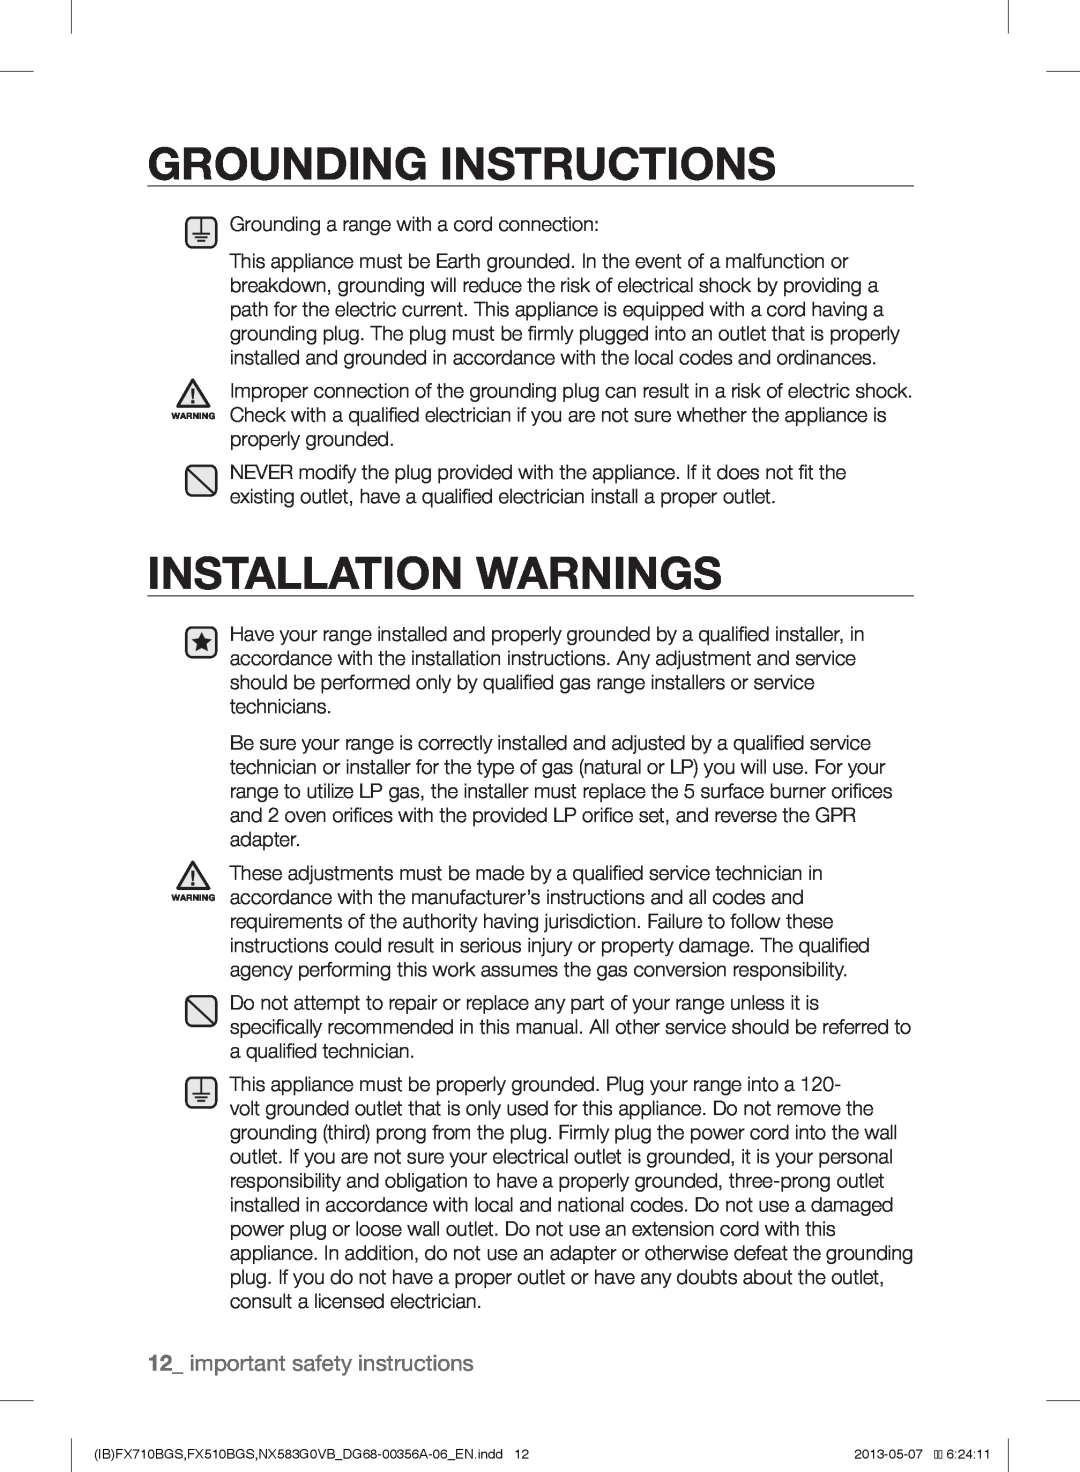 Samsung NX583GOVBBPKG, NX583GOVBBB, FX510BGS Grounding Instructions, Installation Warnings, important safety instructions 